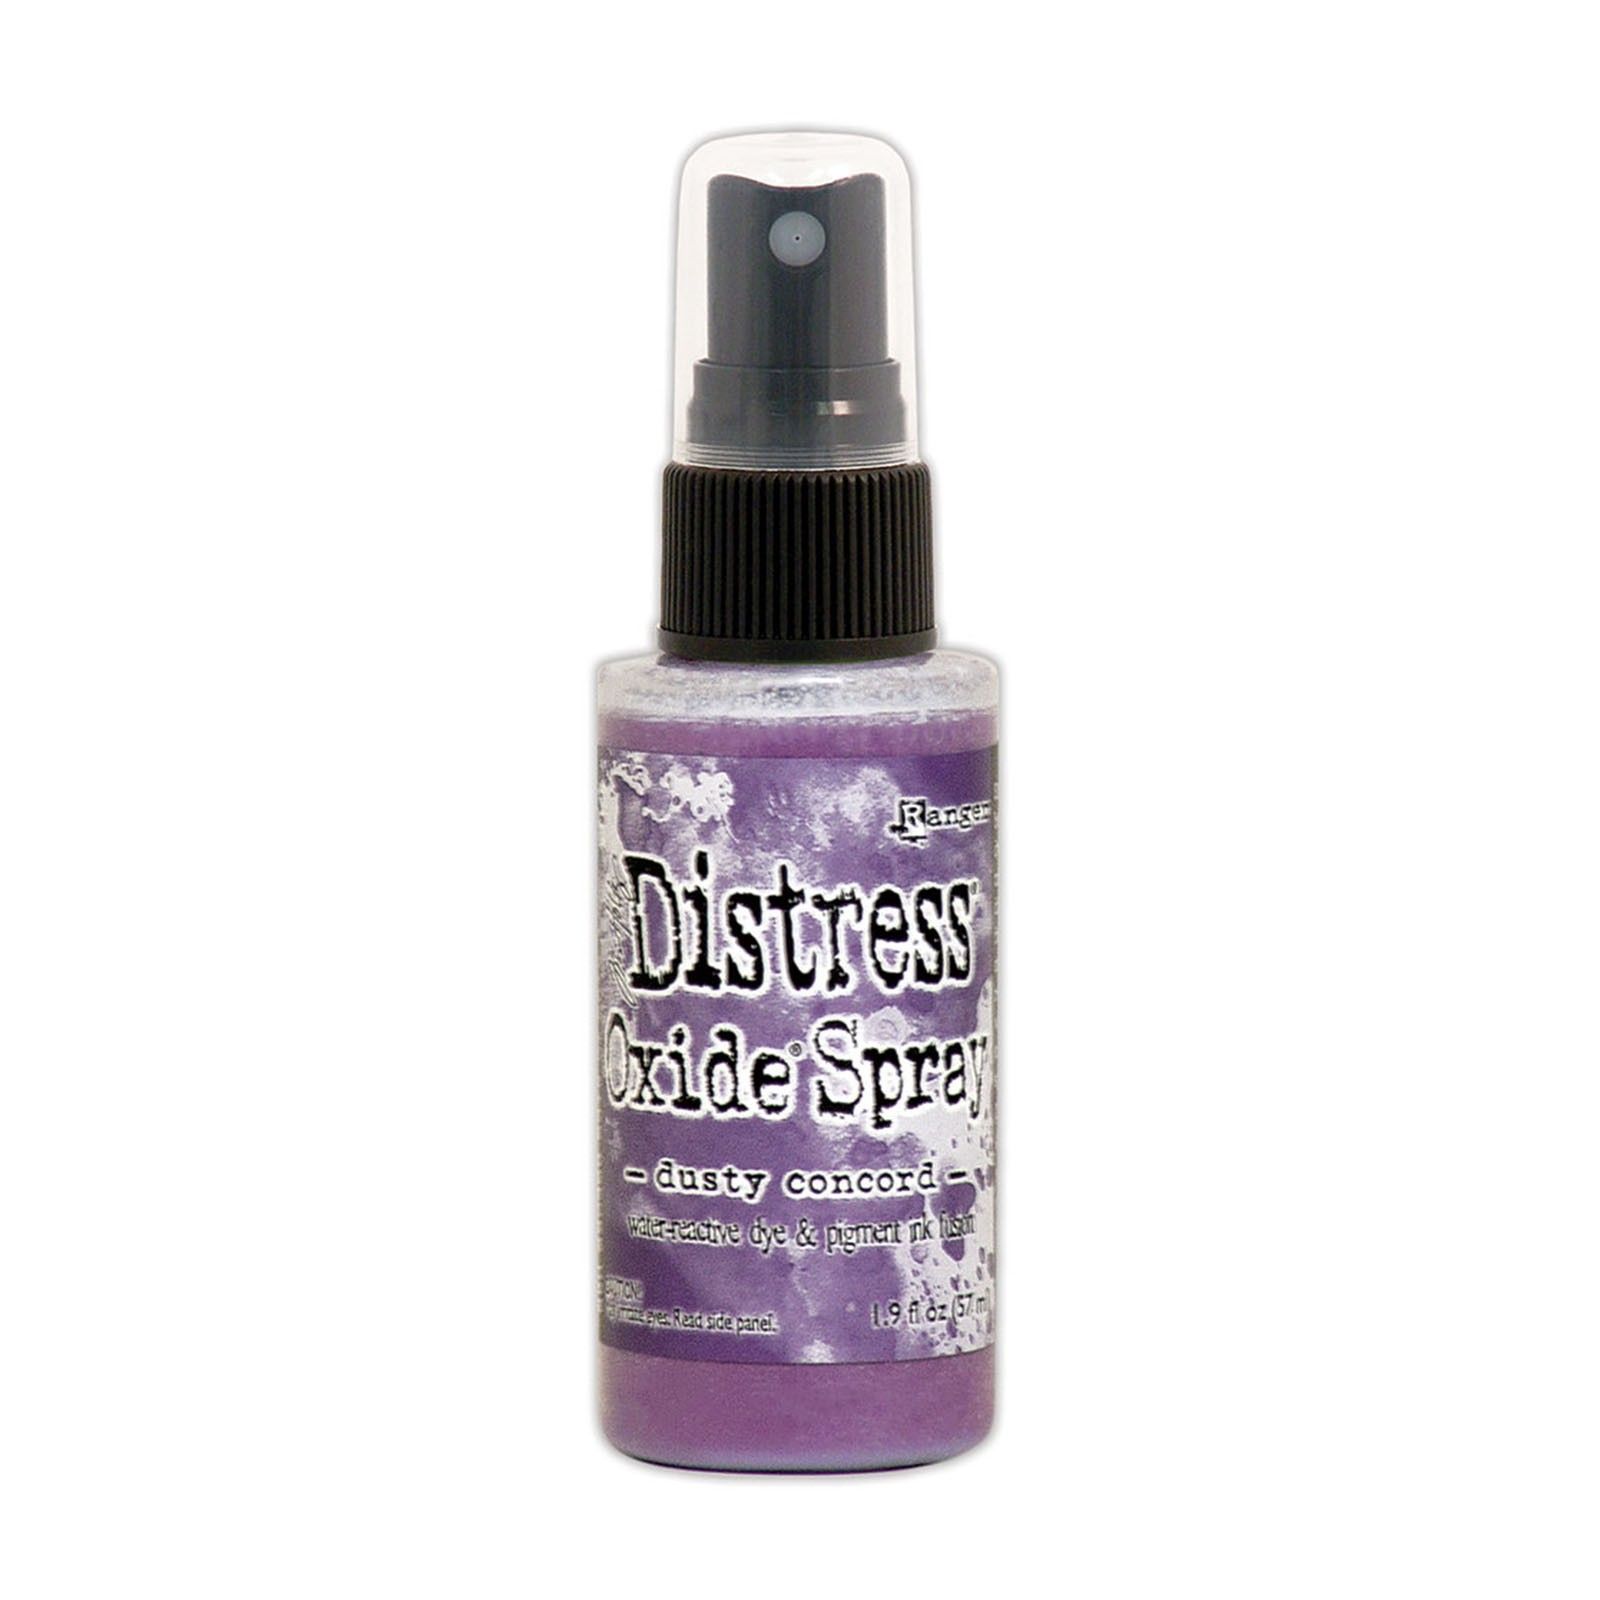 Tim Holtz Distress Oxide Spray 1.9fl oz - Dusty Concord